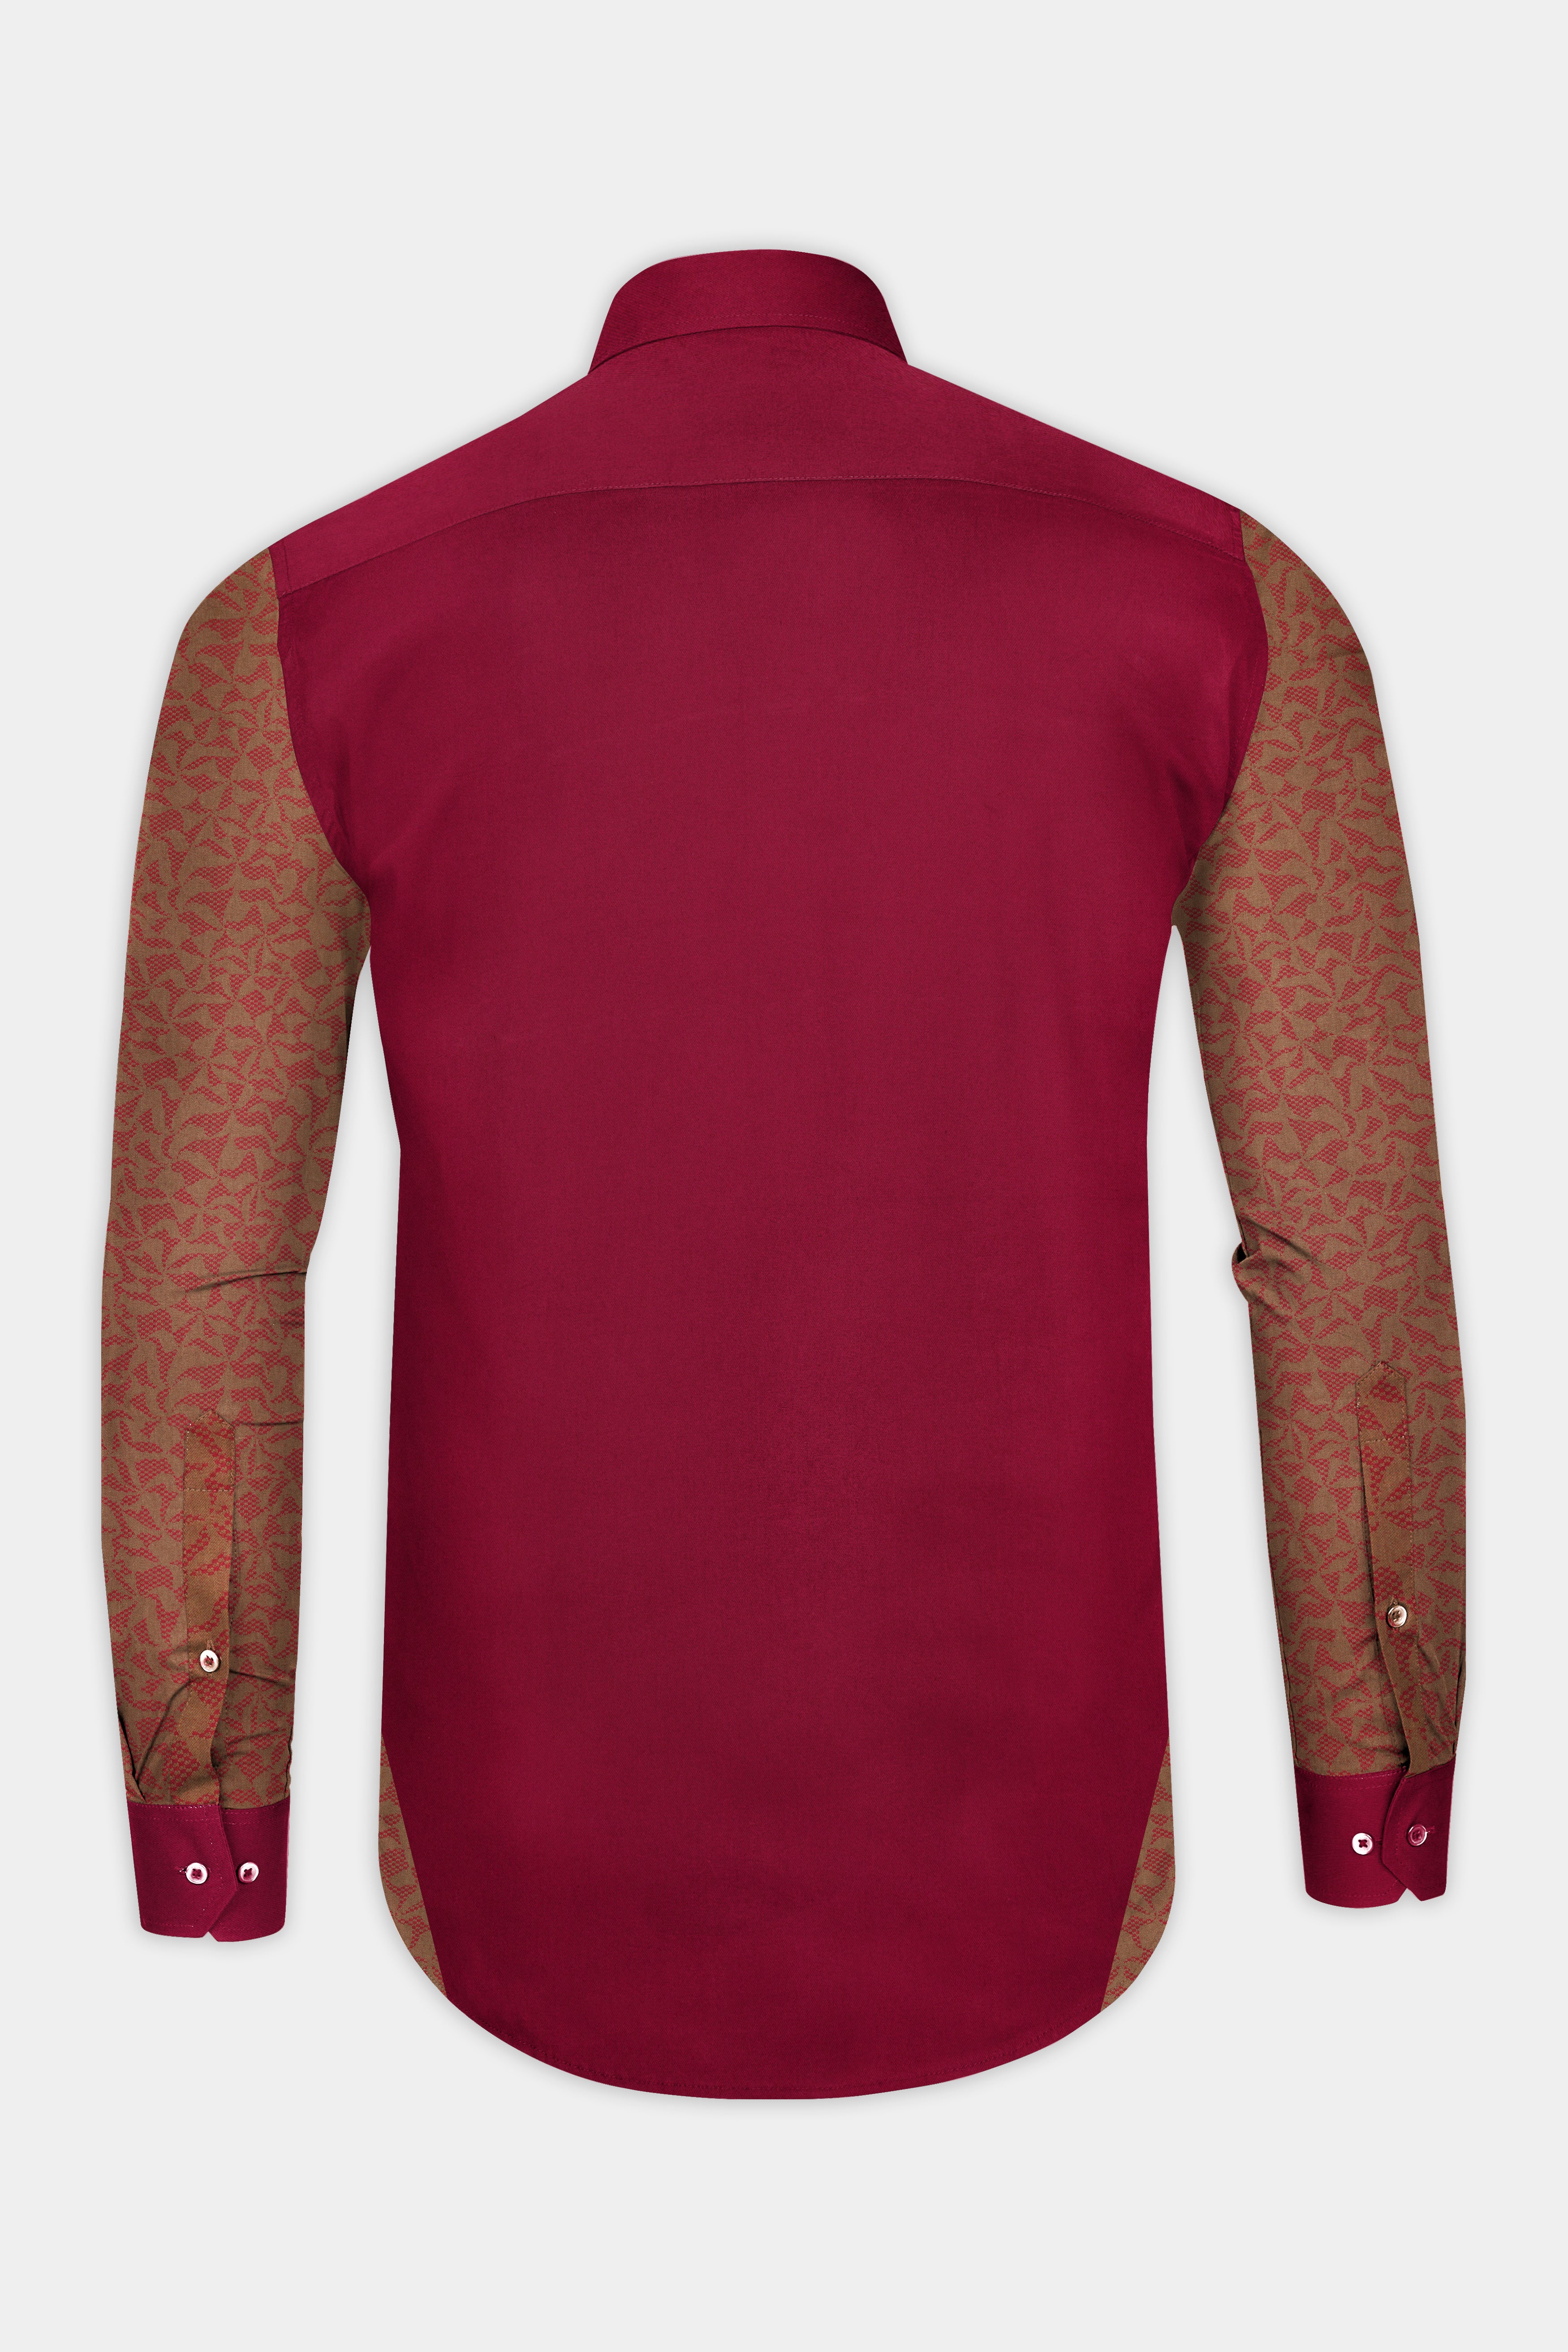 Claret Red with Antique Brass Super Soft Premium Cotton Designer Shirt